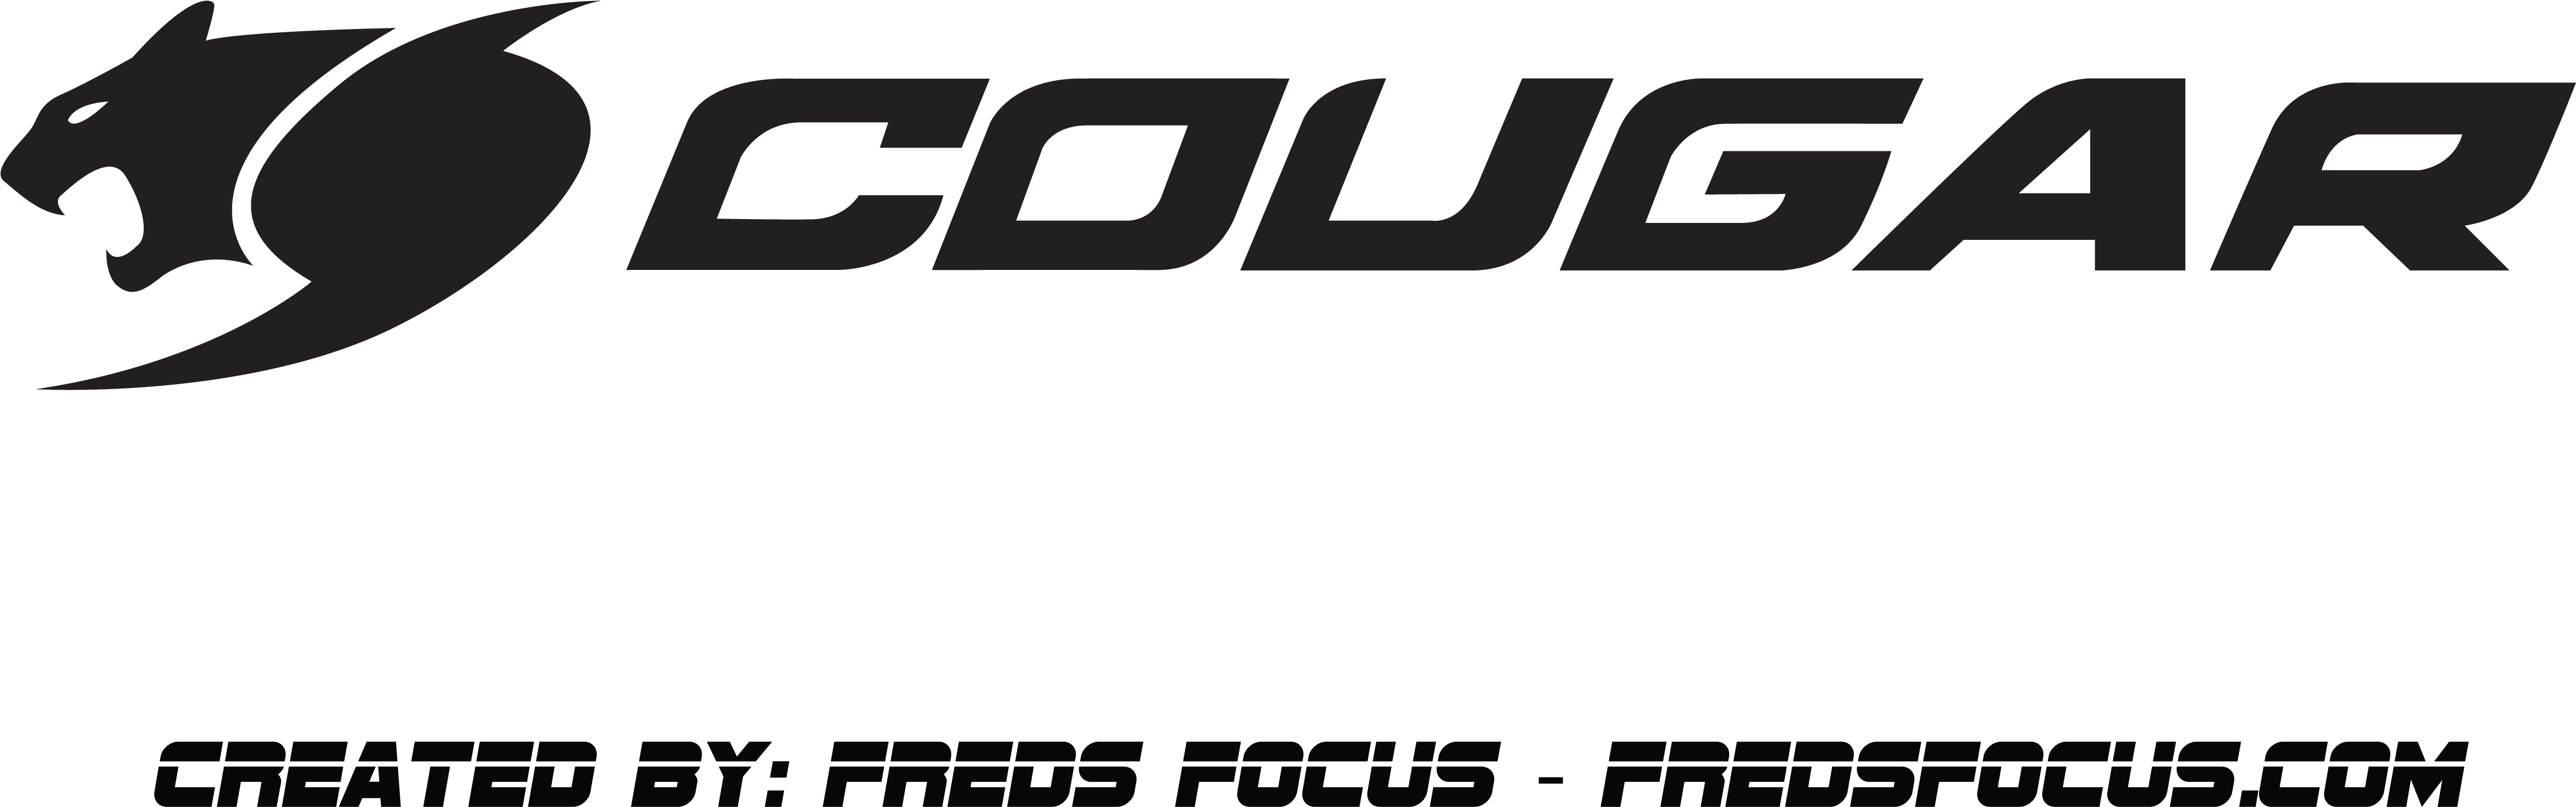 Cougar Vector Logo - Cougar Gaming Logo (5000x3568), Png Download